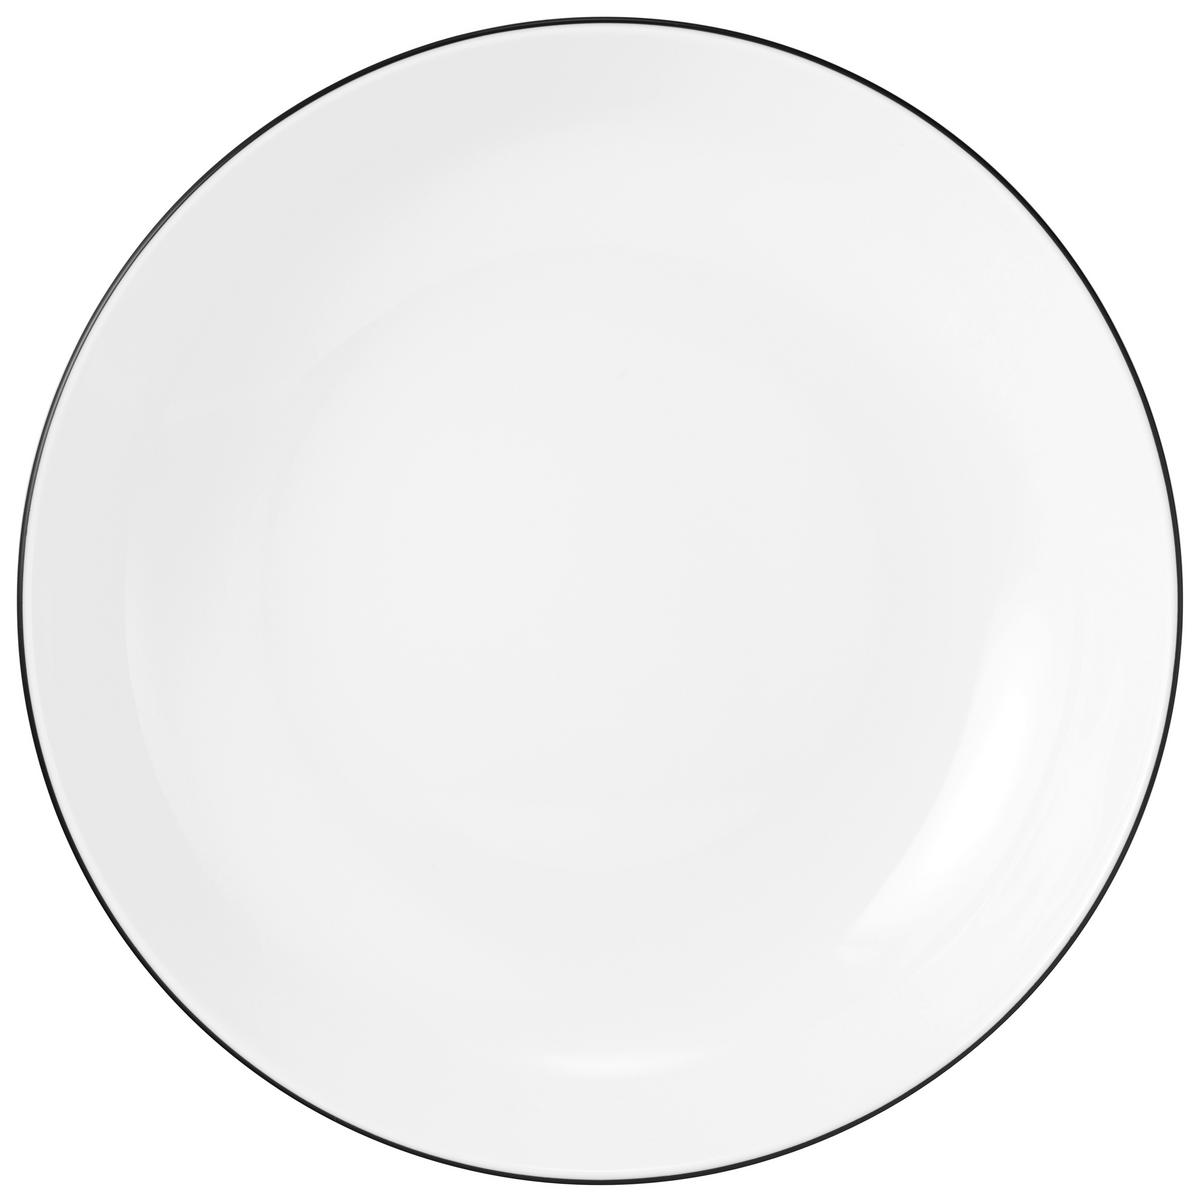 KOMBI SERVIS    30-dijelni   - bijela/crna, Basics, keramika - Seltmann Weiden